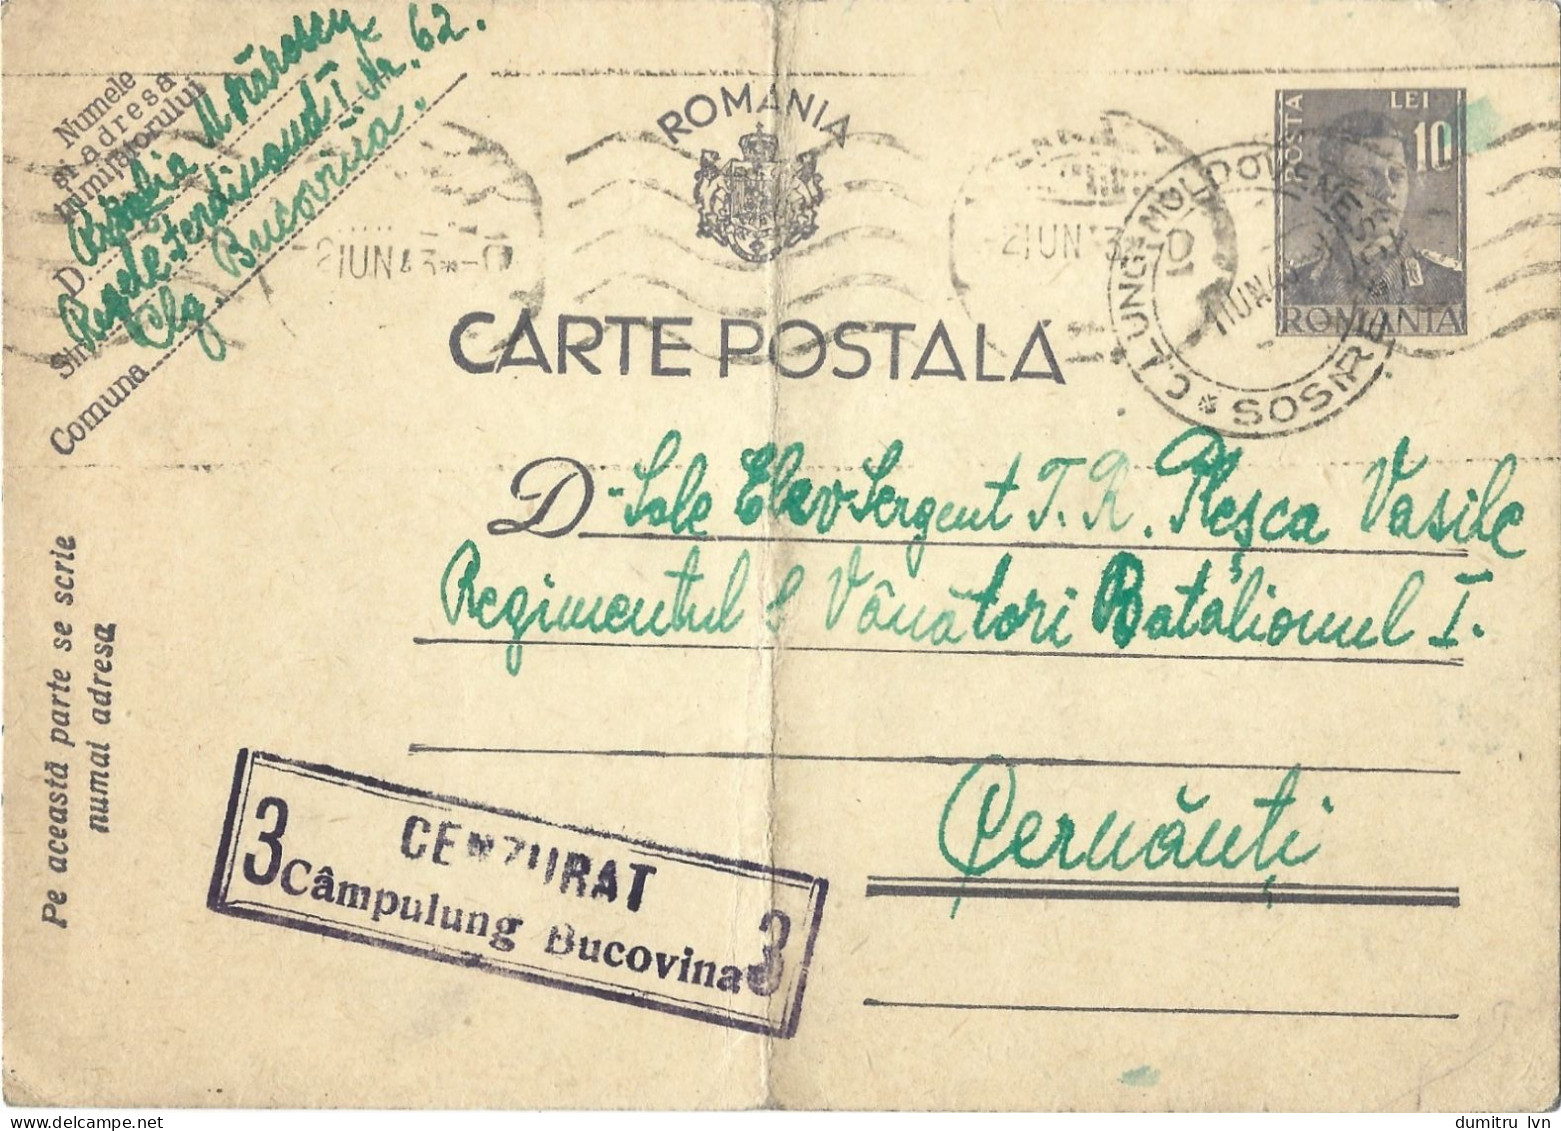 ROMANIA 1943 POSTCARD, CENSORED CAMPULUNG-BUCOVINA 3, POSTCARD STATIONERY - World War 2 Letters